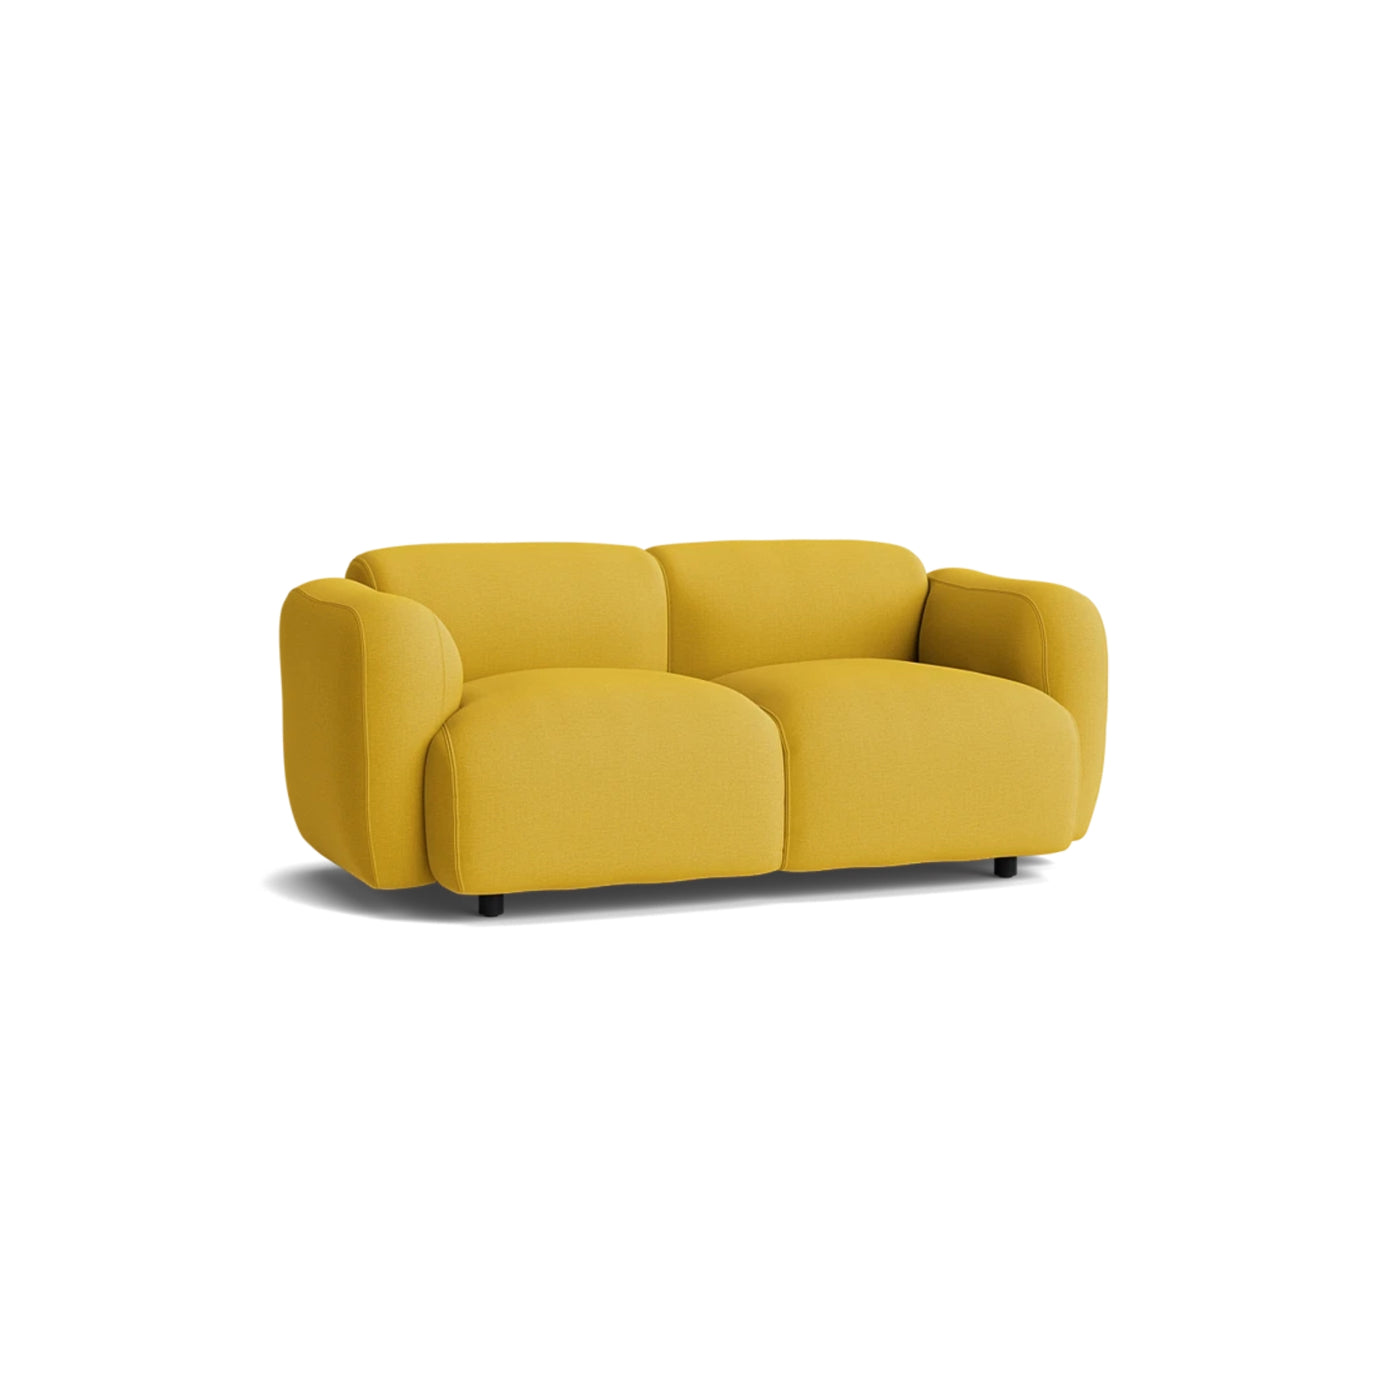 Normann Copenhagen Swell 2 Seater Sofa at someday designs. #colour_steelcut-trio-446